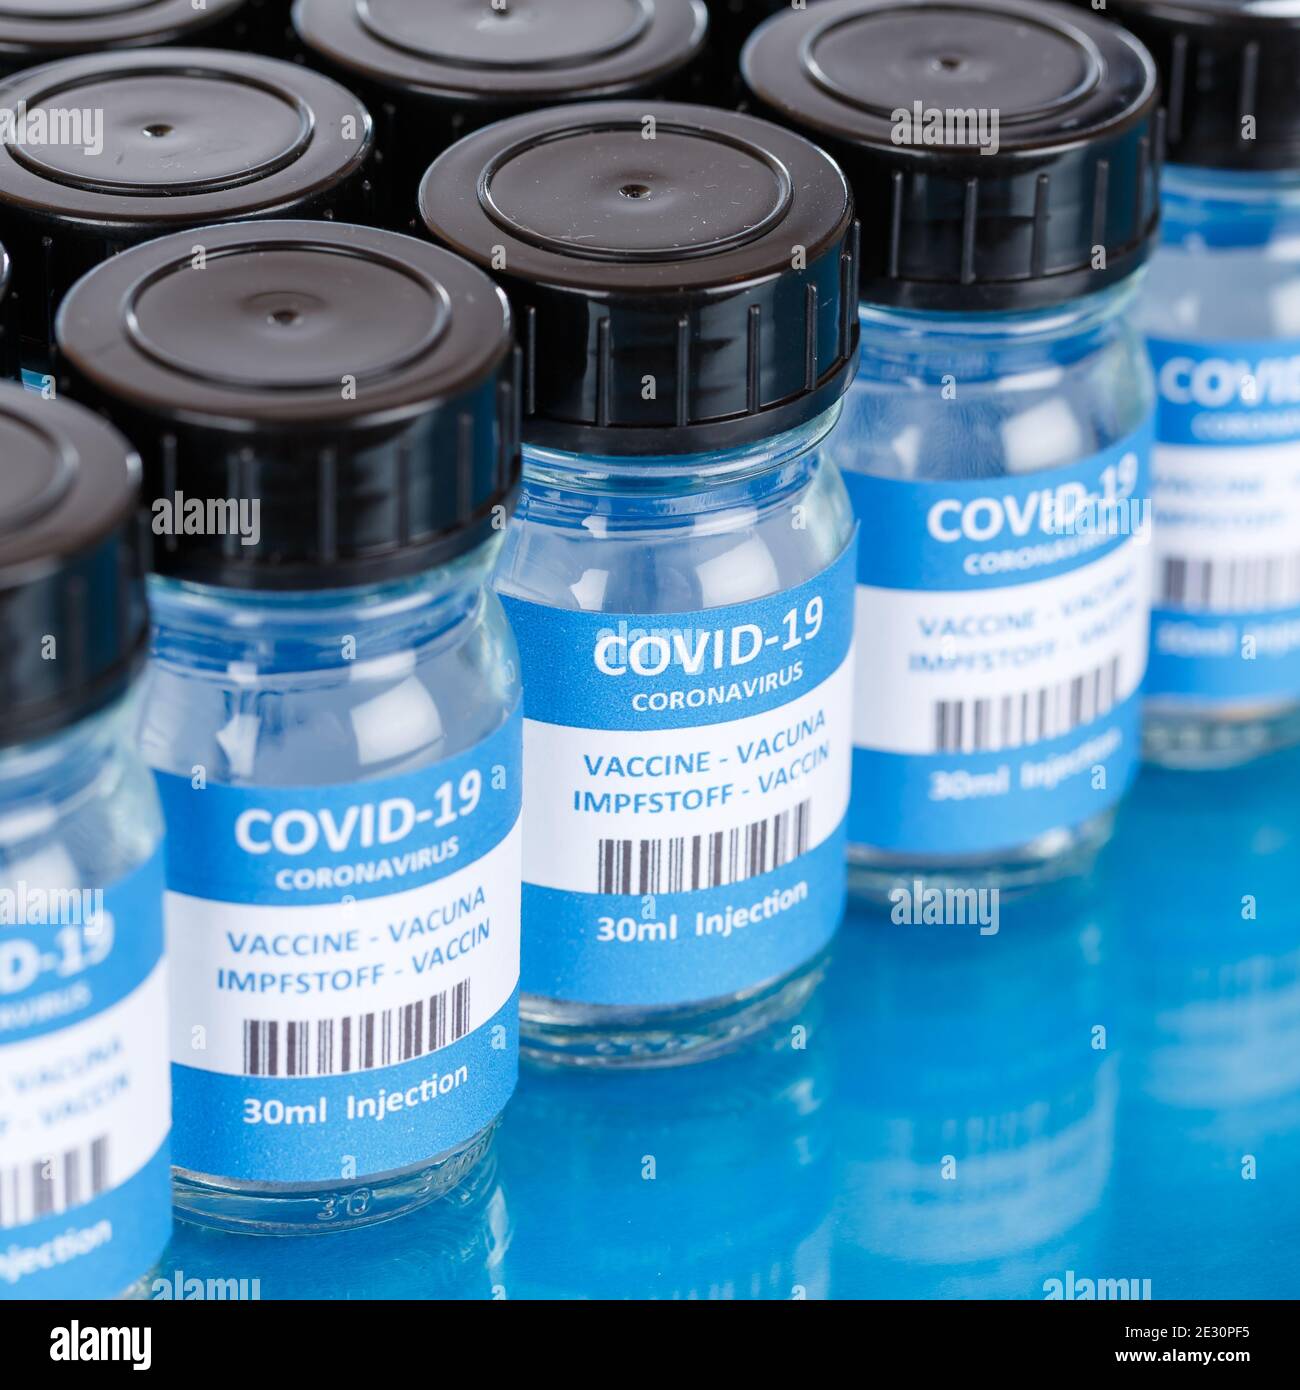 Coronavirus Vaccine bottle Corona Virus COVID-19 Covid vaccines square bottles Stock Photo